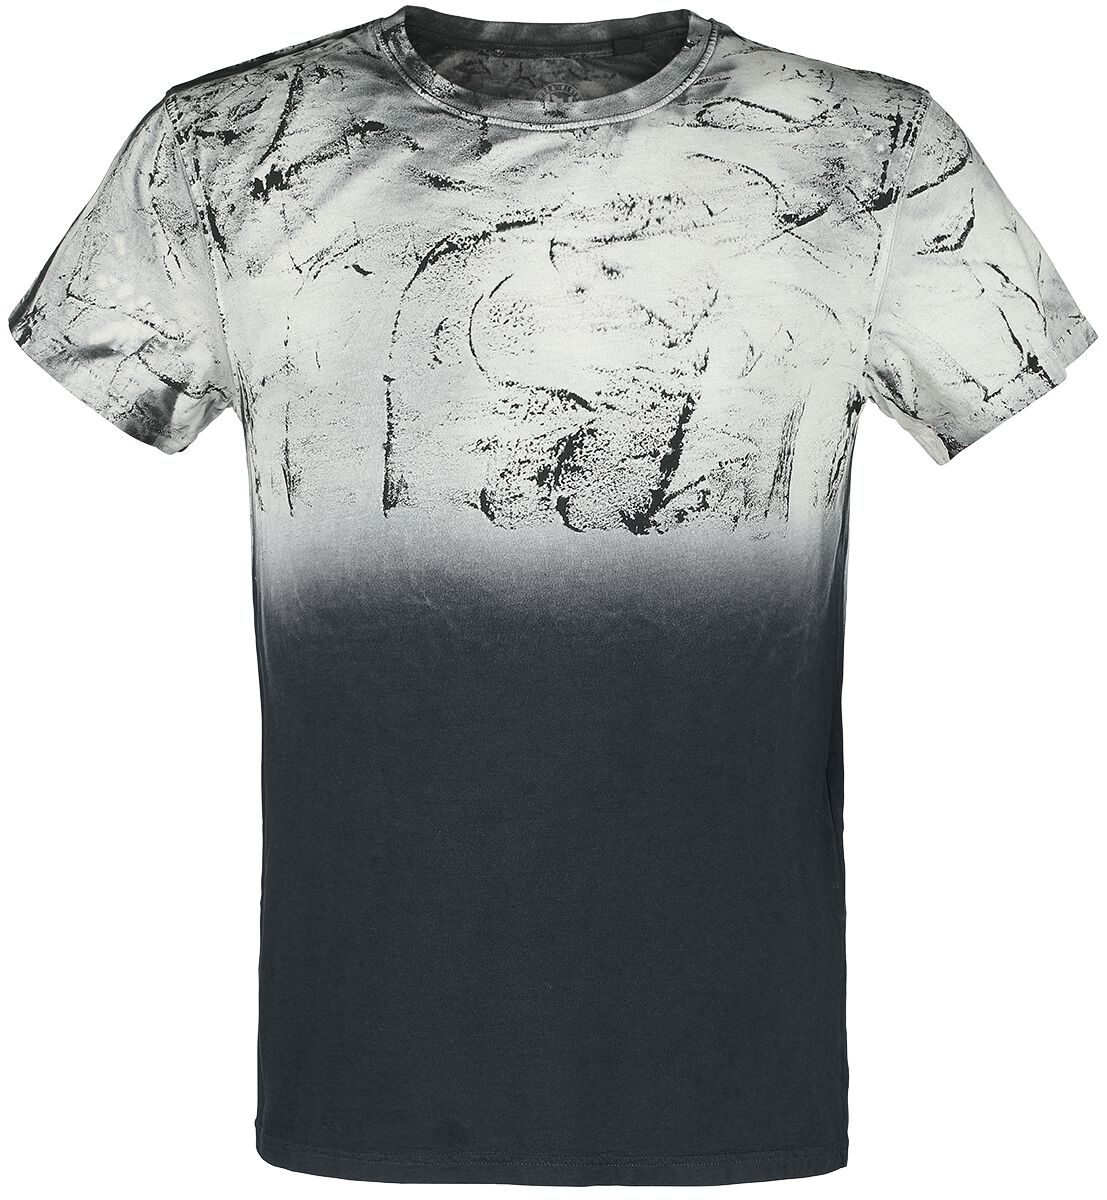 Outer Vision Man`s T-Shirt Spatolato T-Shirt schwarz grau in 4XL